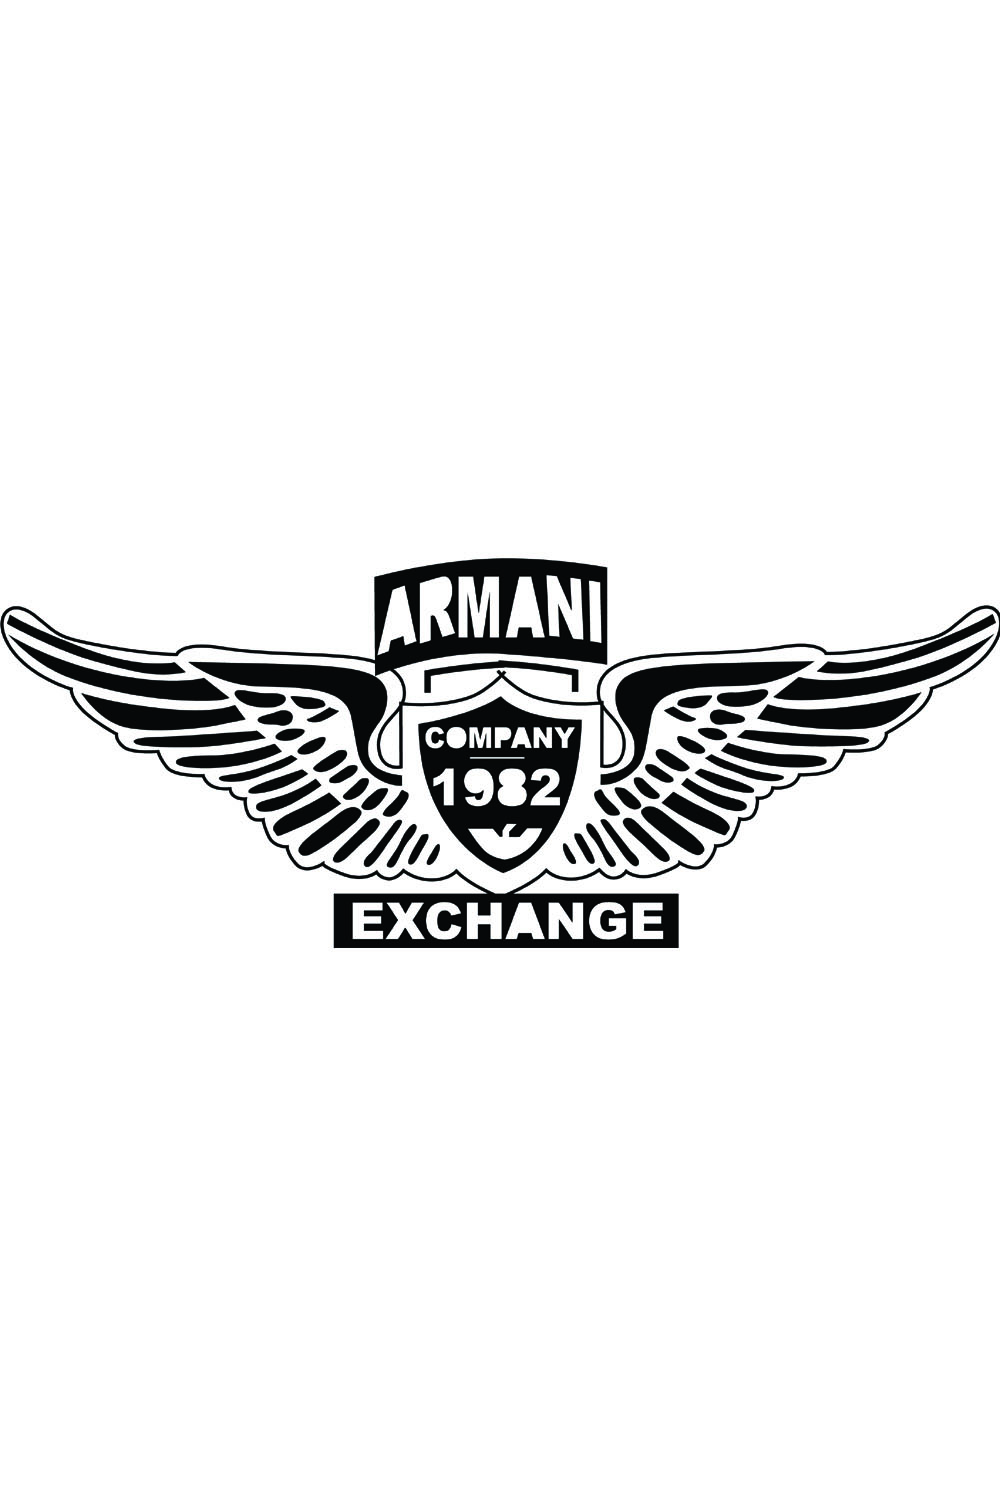 Armani 1982 T Shirt pinterest preview image.